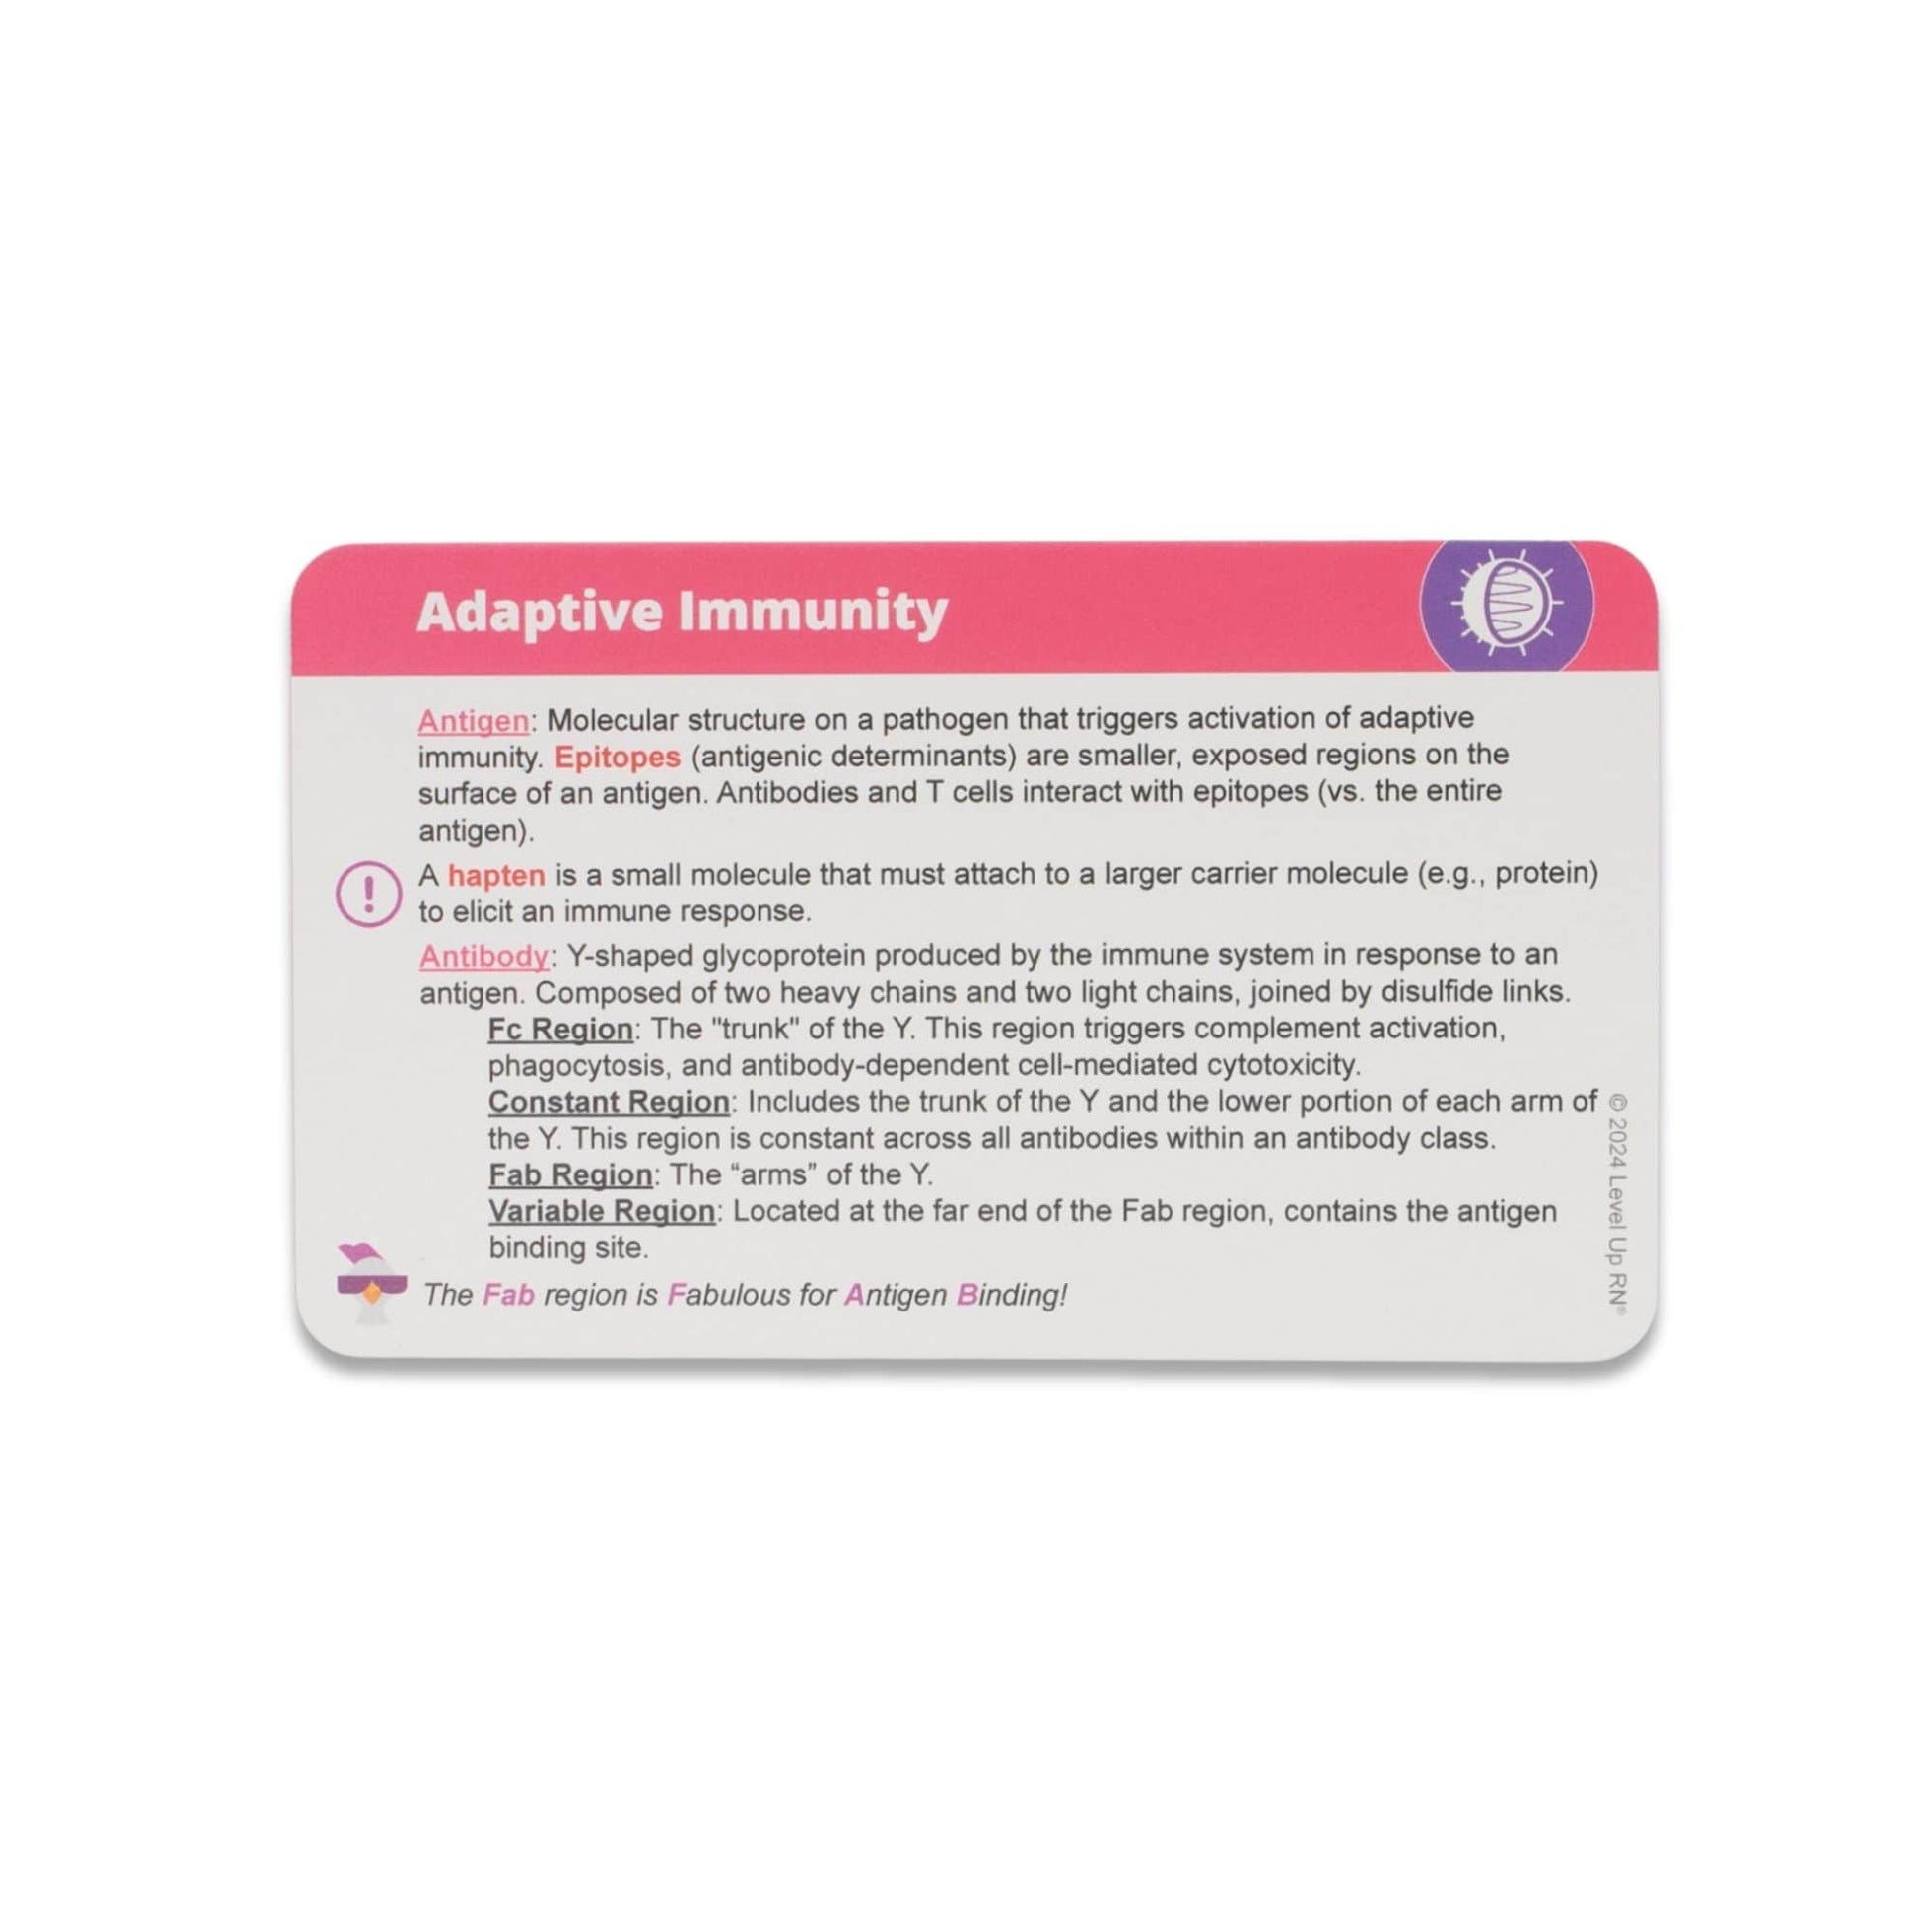 adaptive immunity card back